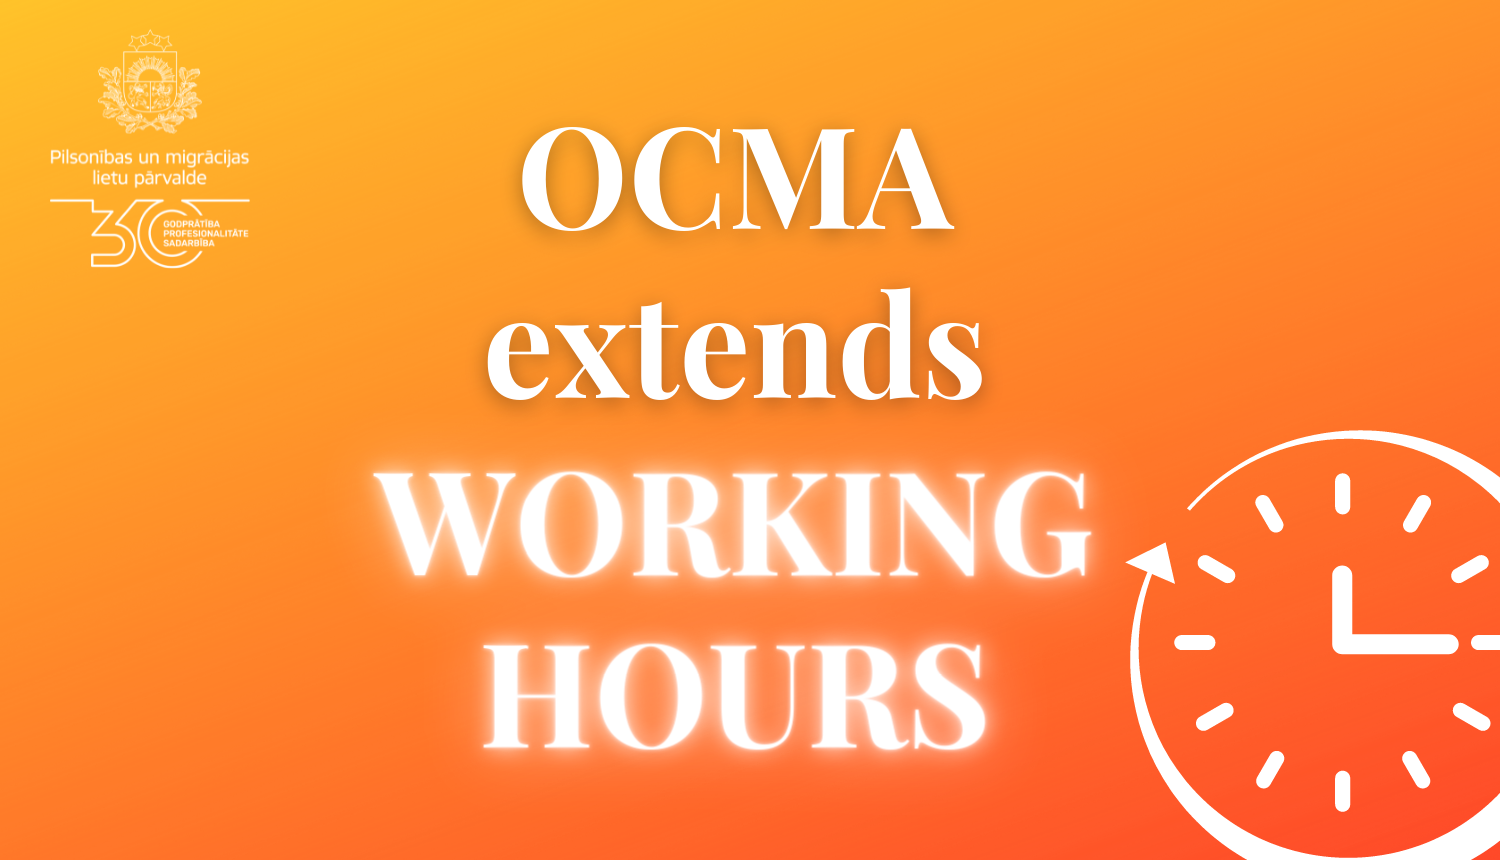 OCMA extends working hours